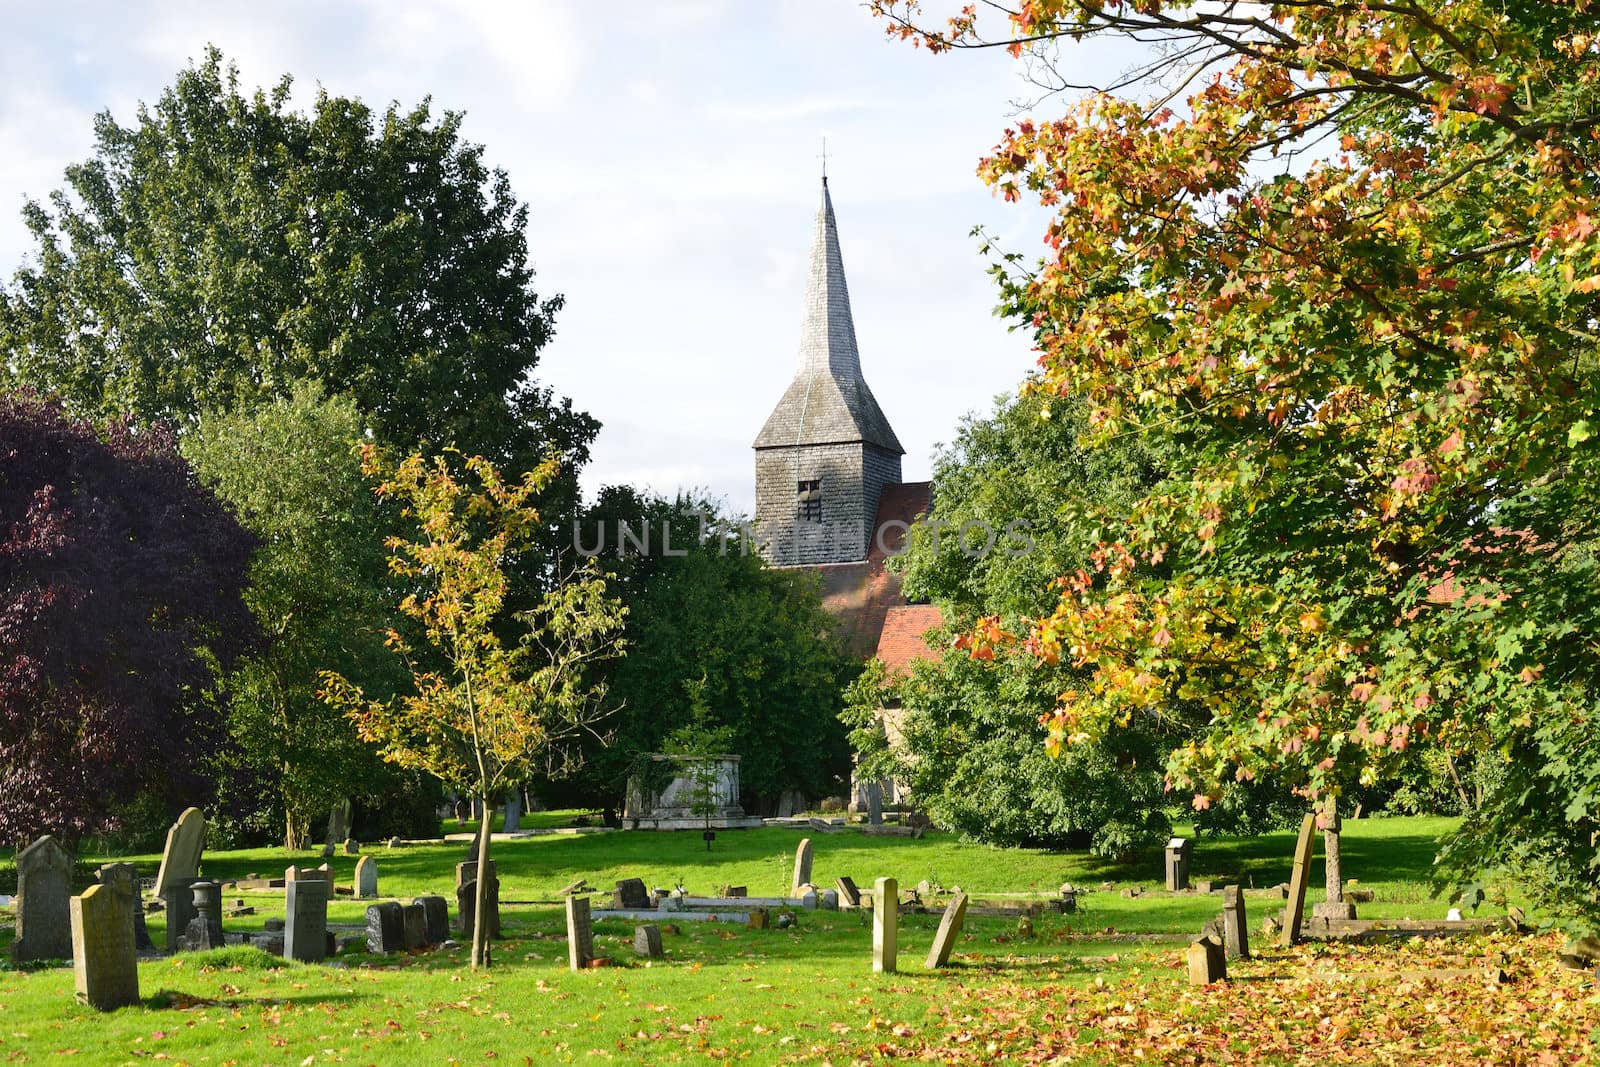 English Churchyard in Autumn by pauws99